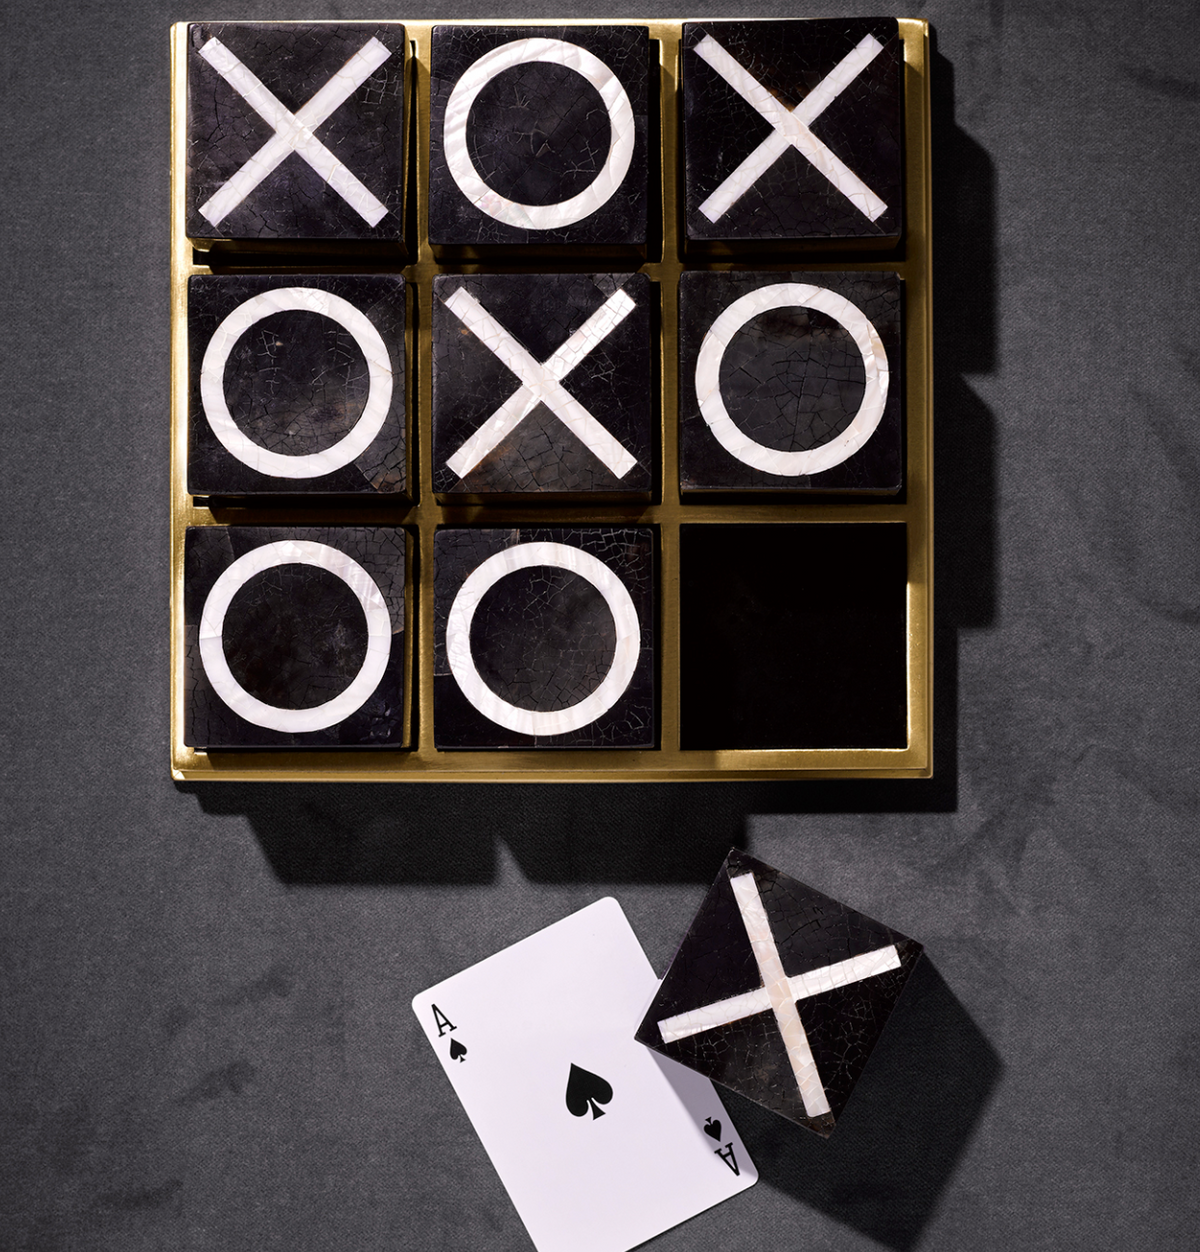 Deco Tic Tac Toe Handcrafted Beautiful Decorative Table Games - L'OBJET